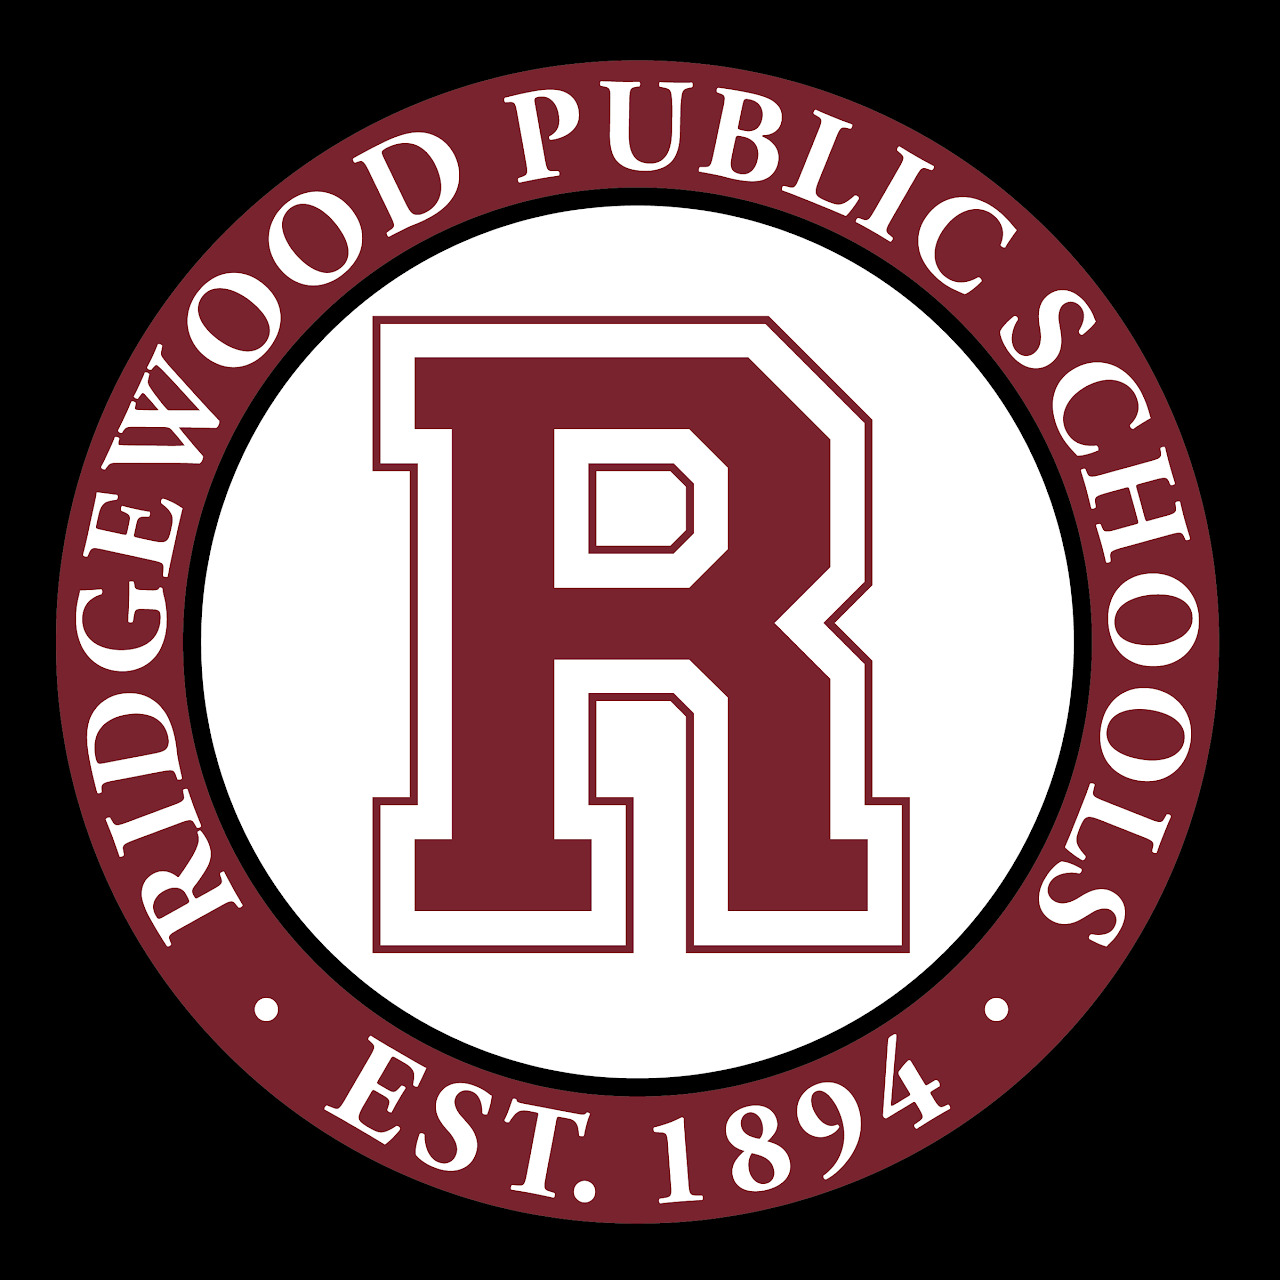 Ridgewood Public Schools LOGO Copy 2